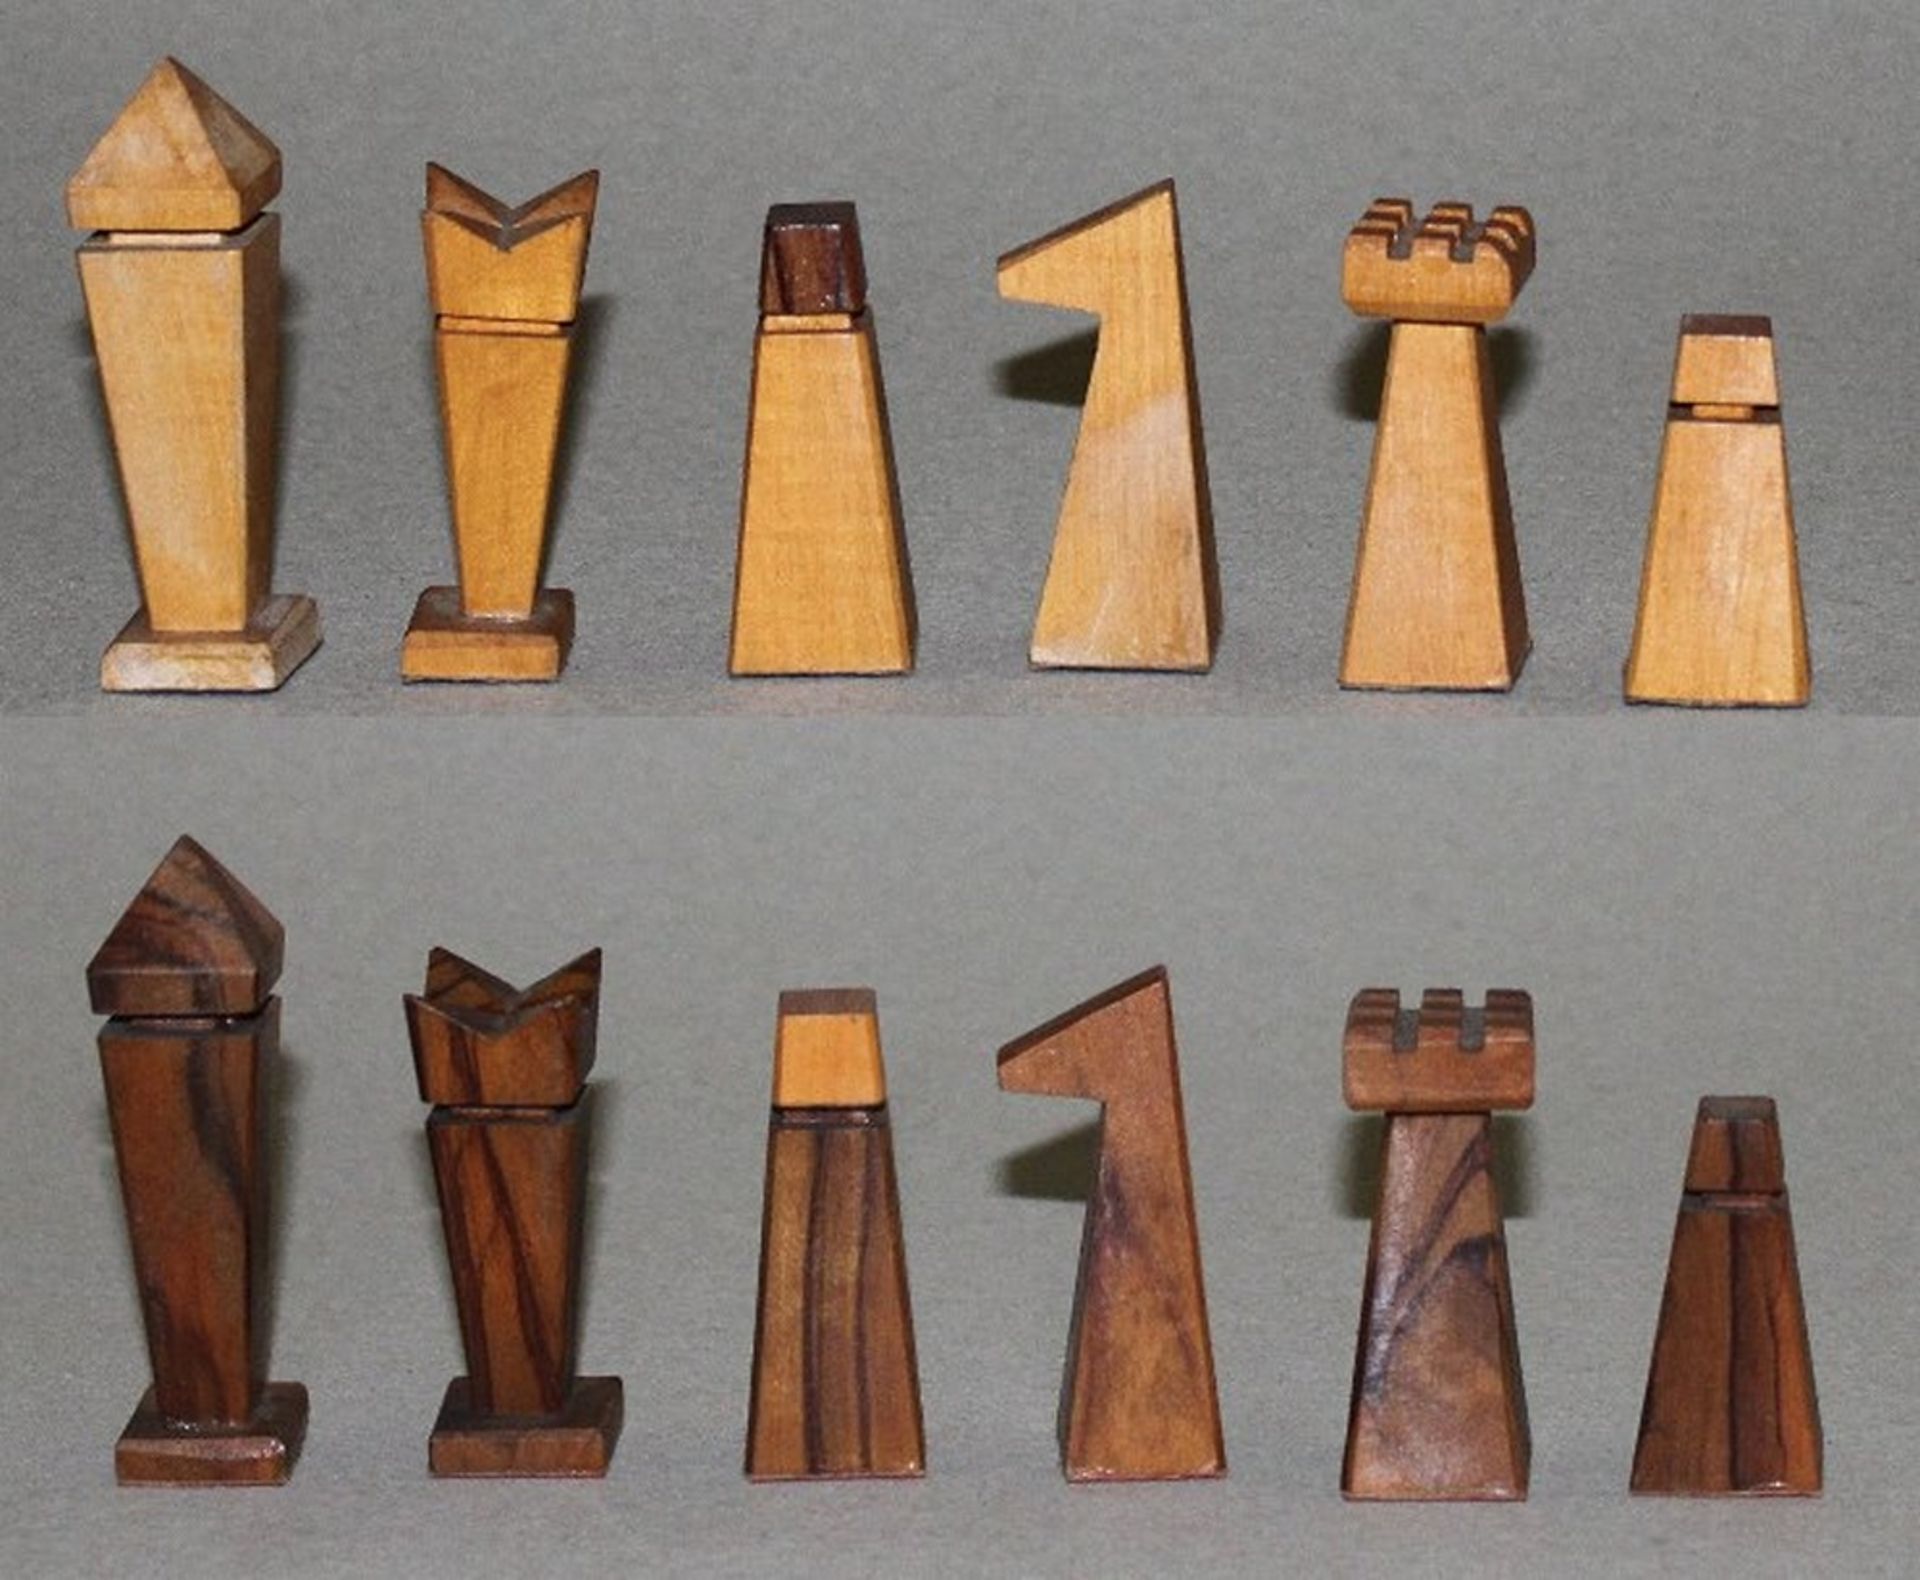 Asien. Nahe Osten. Israel. Jonas – Art of wood. Moderne Schachfiguren aus Holz in einer faltbaren